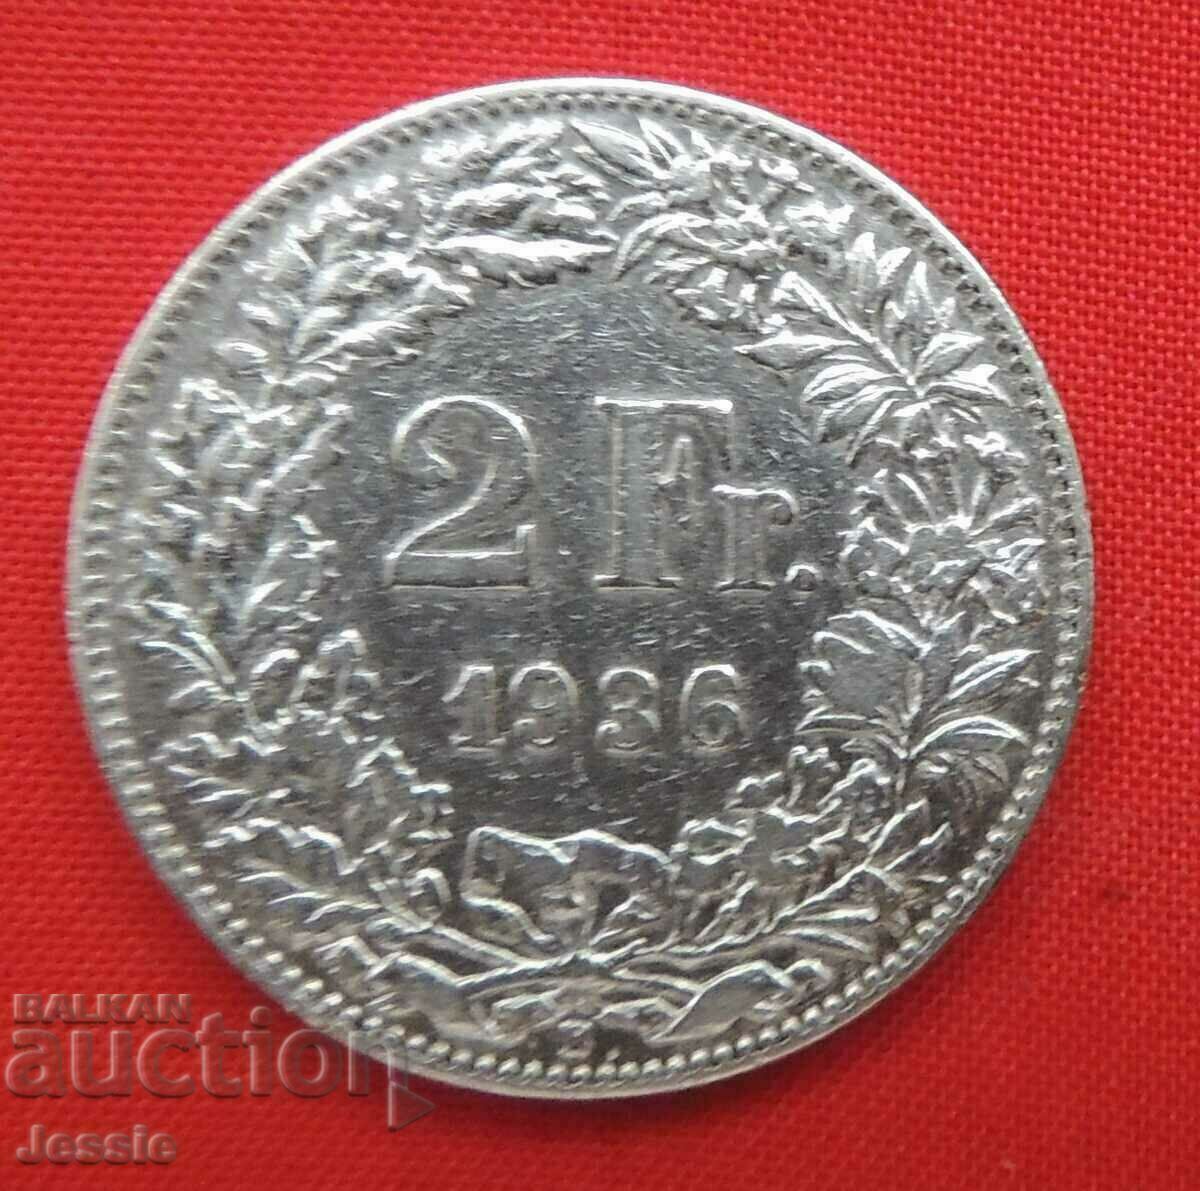 2 Francs 1936 B SWITZERLAND silver